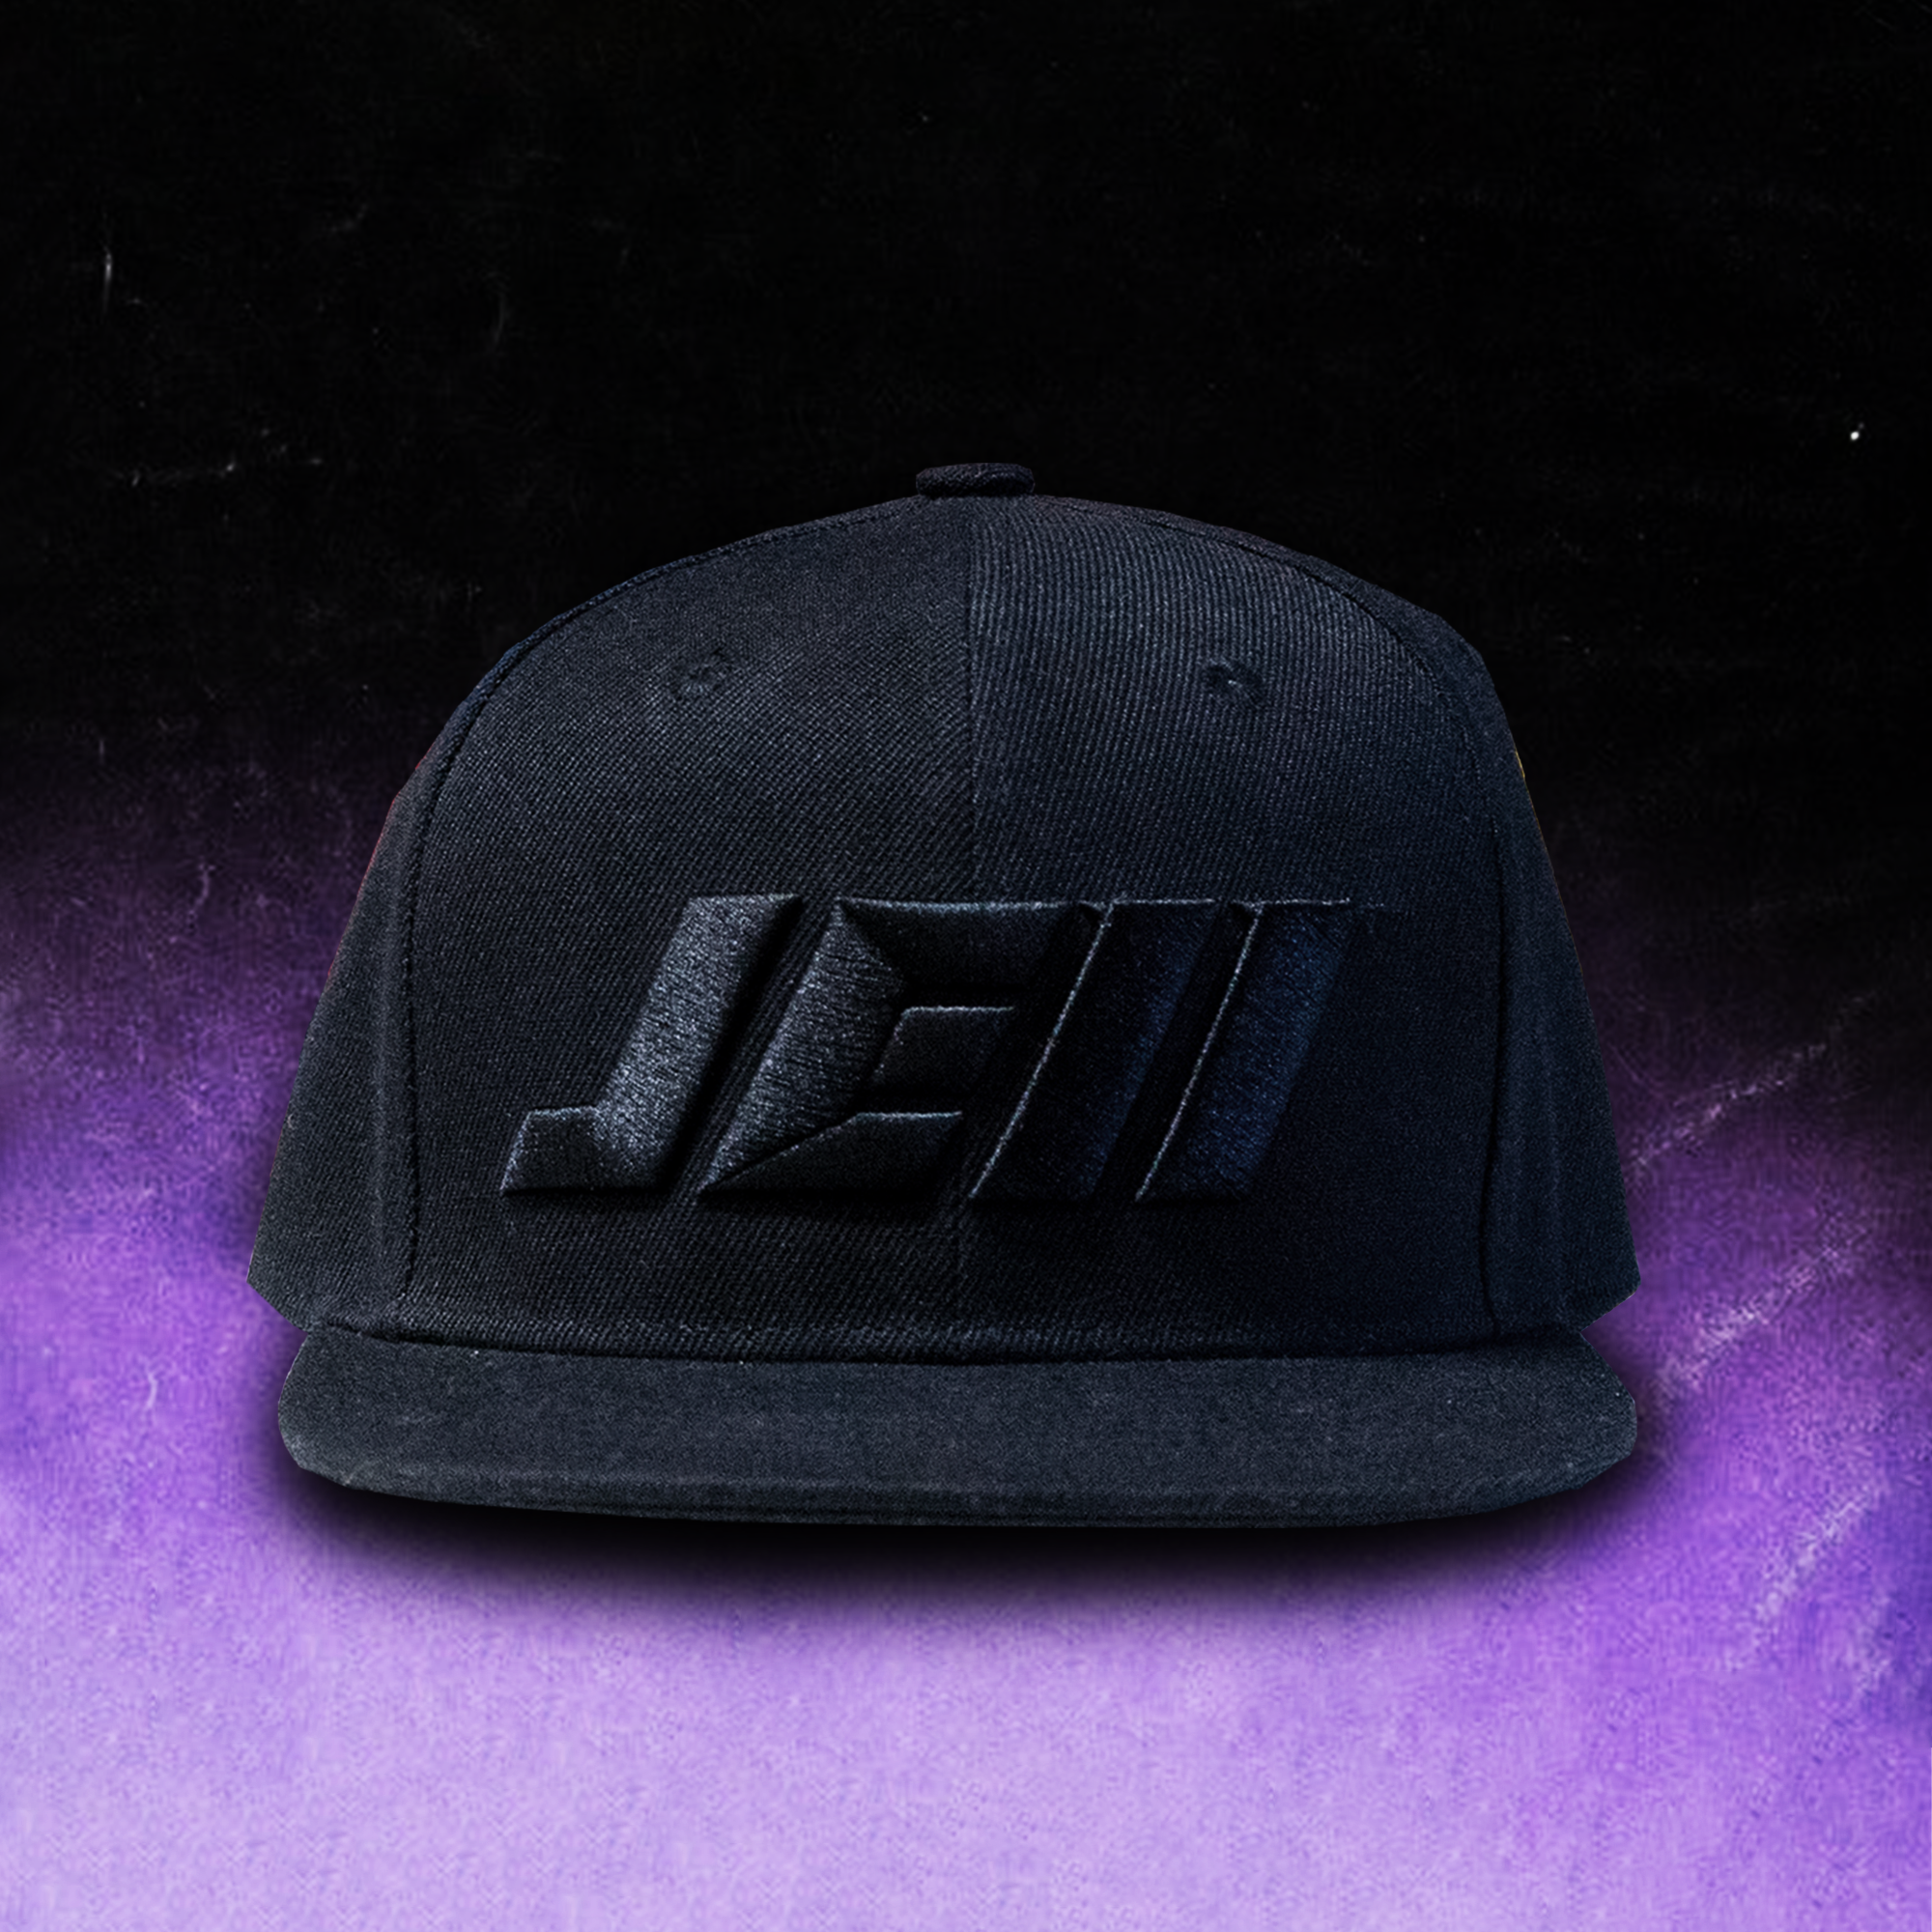 je11 hats